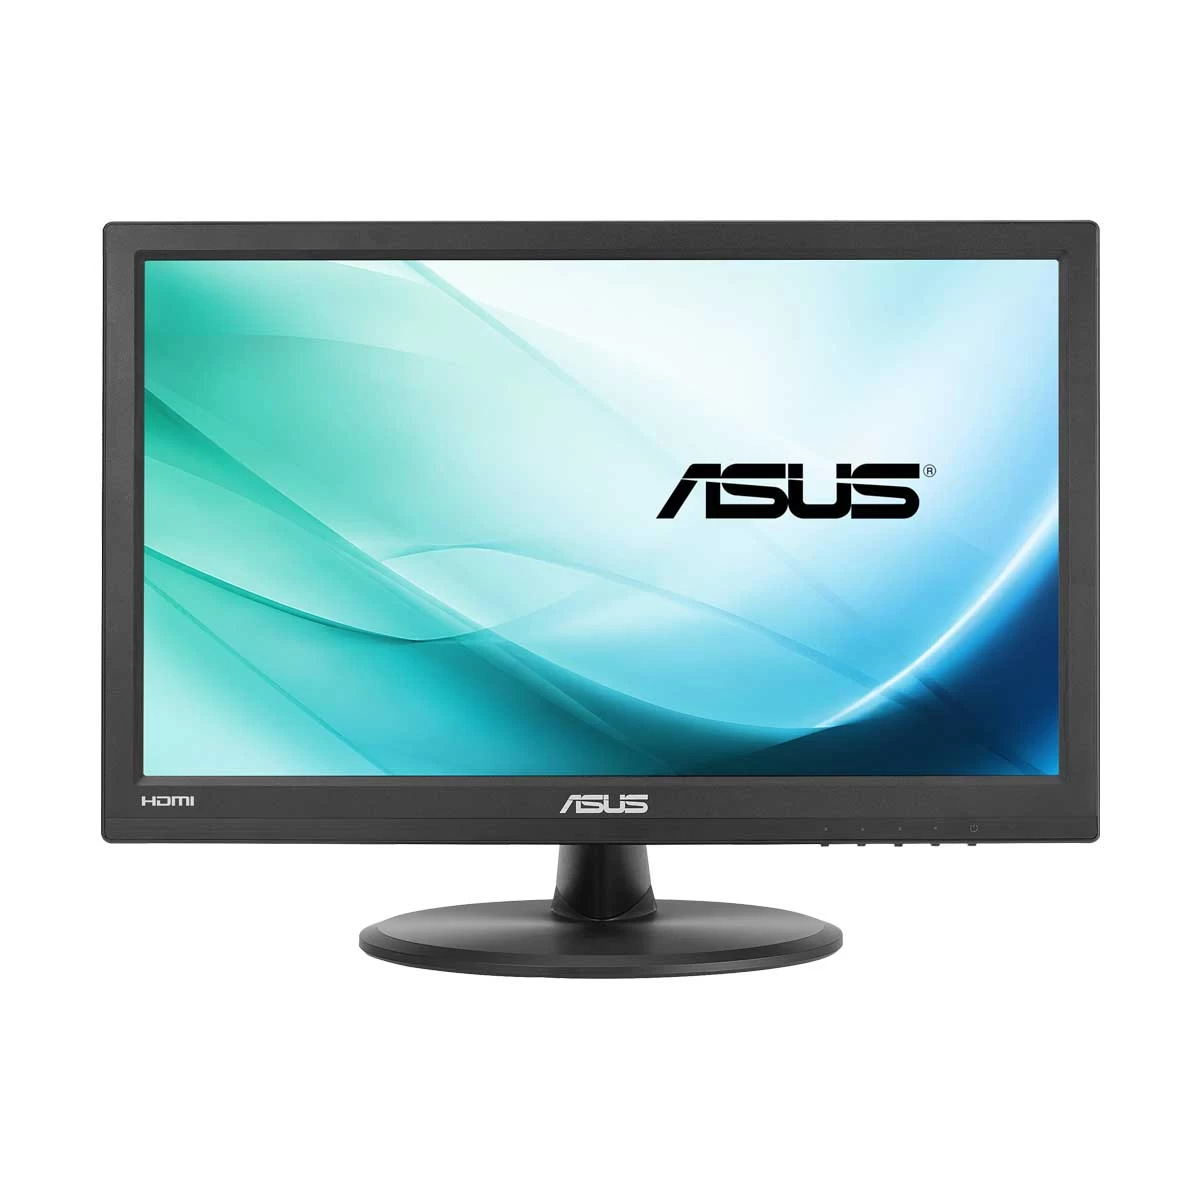 Asus VT168H 15.6 Inch HD (1366x768) Touch Monitor (HDMI, VGA, Earphone, USB)